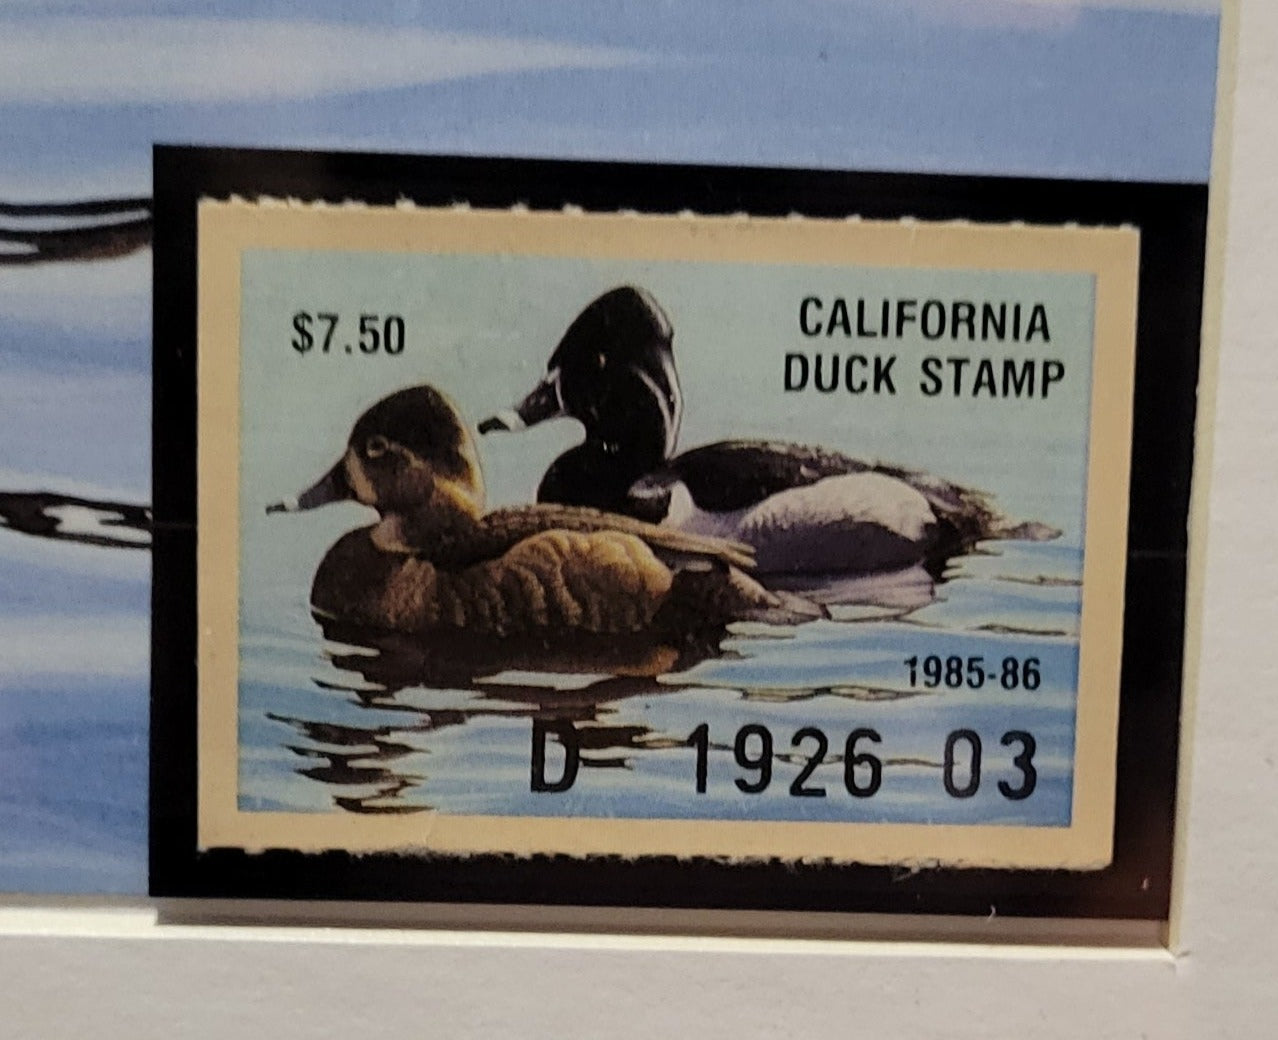 CA 15. Vintage Print and Stamp circa 1985.